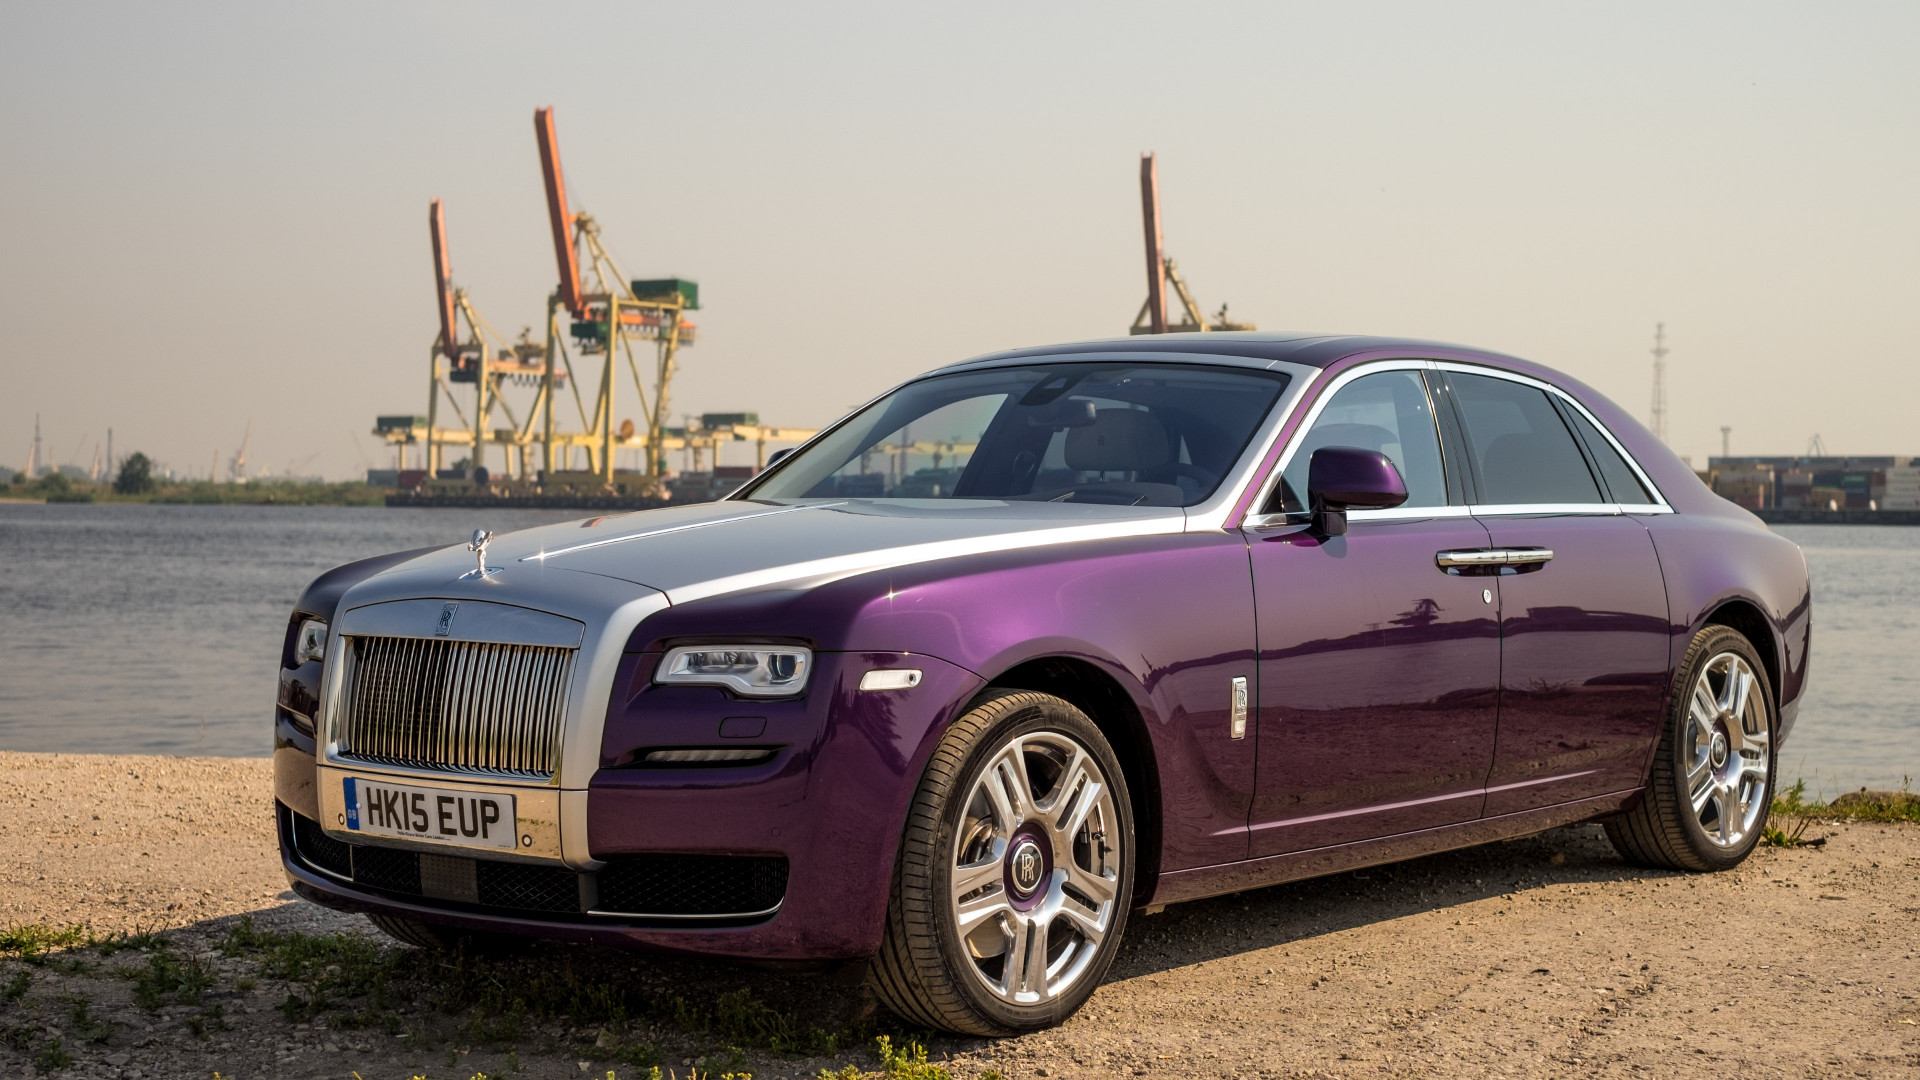 Rolls-Royce Ghost Wallpapers